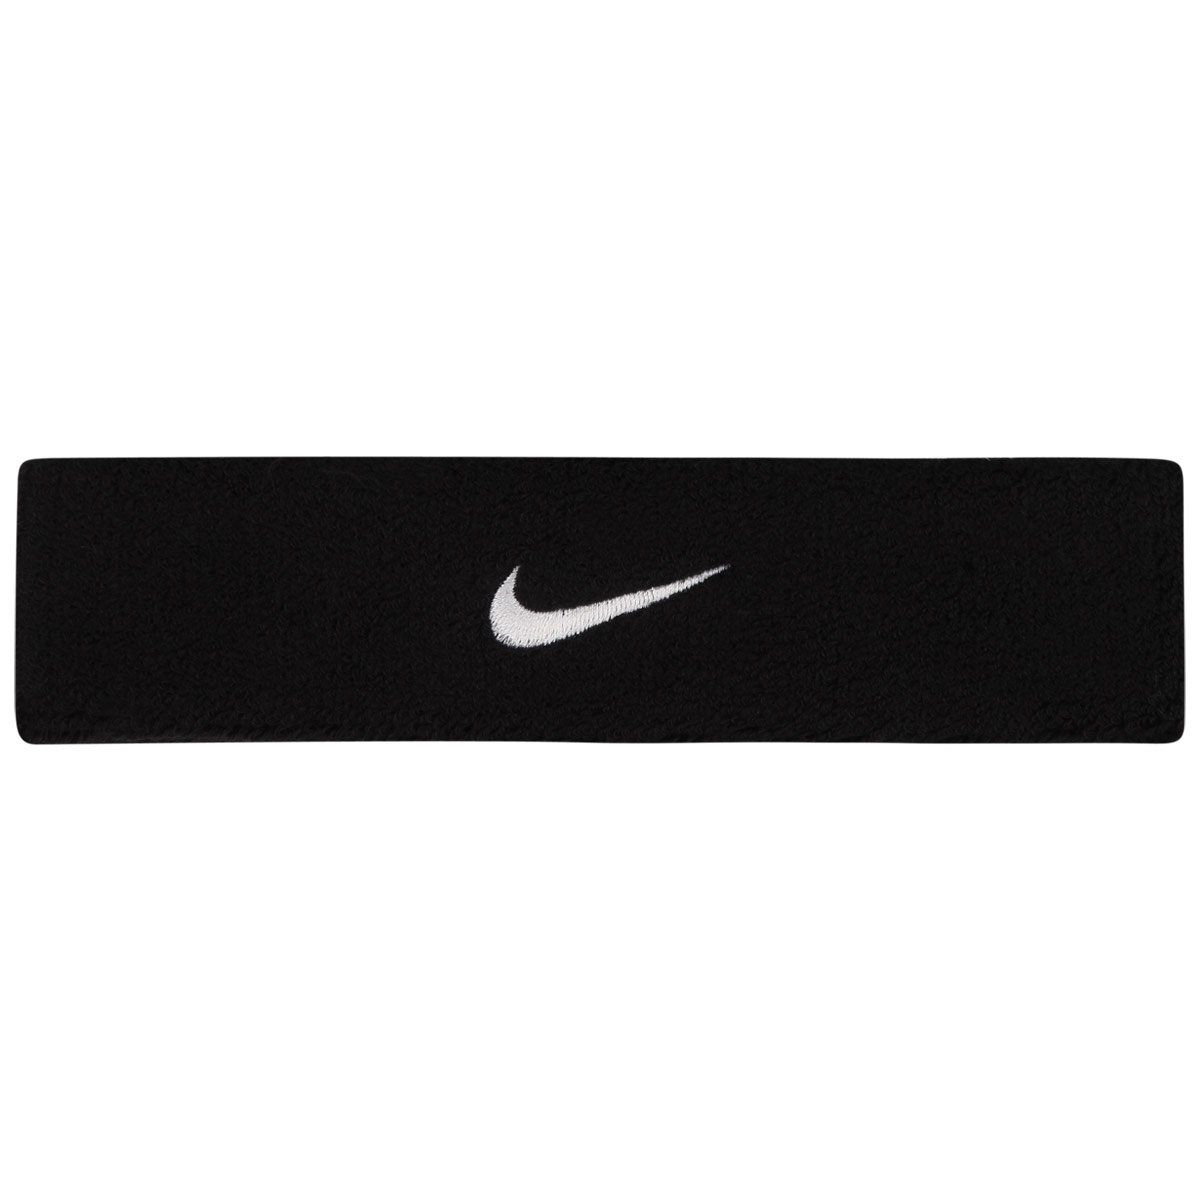 Testeira Nike Swoosh Headband - Preto  - REAL ESPORTE